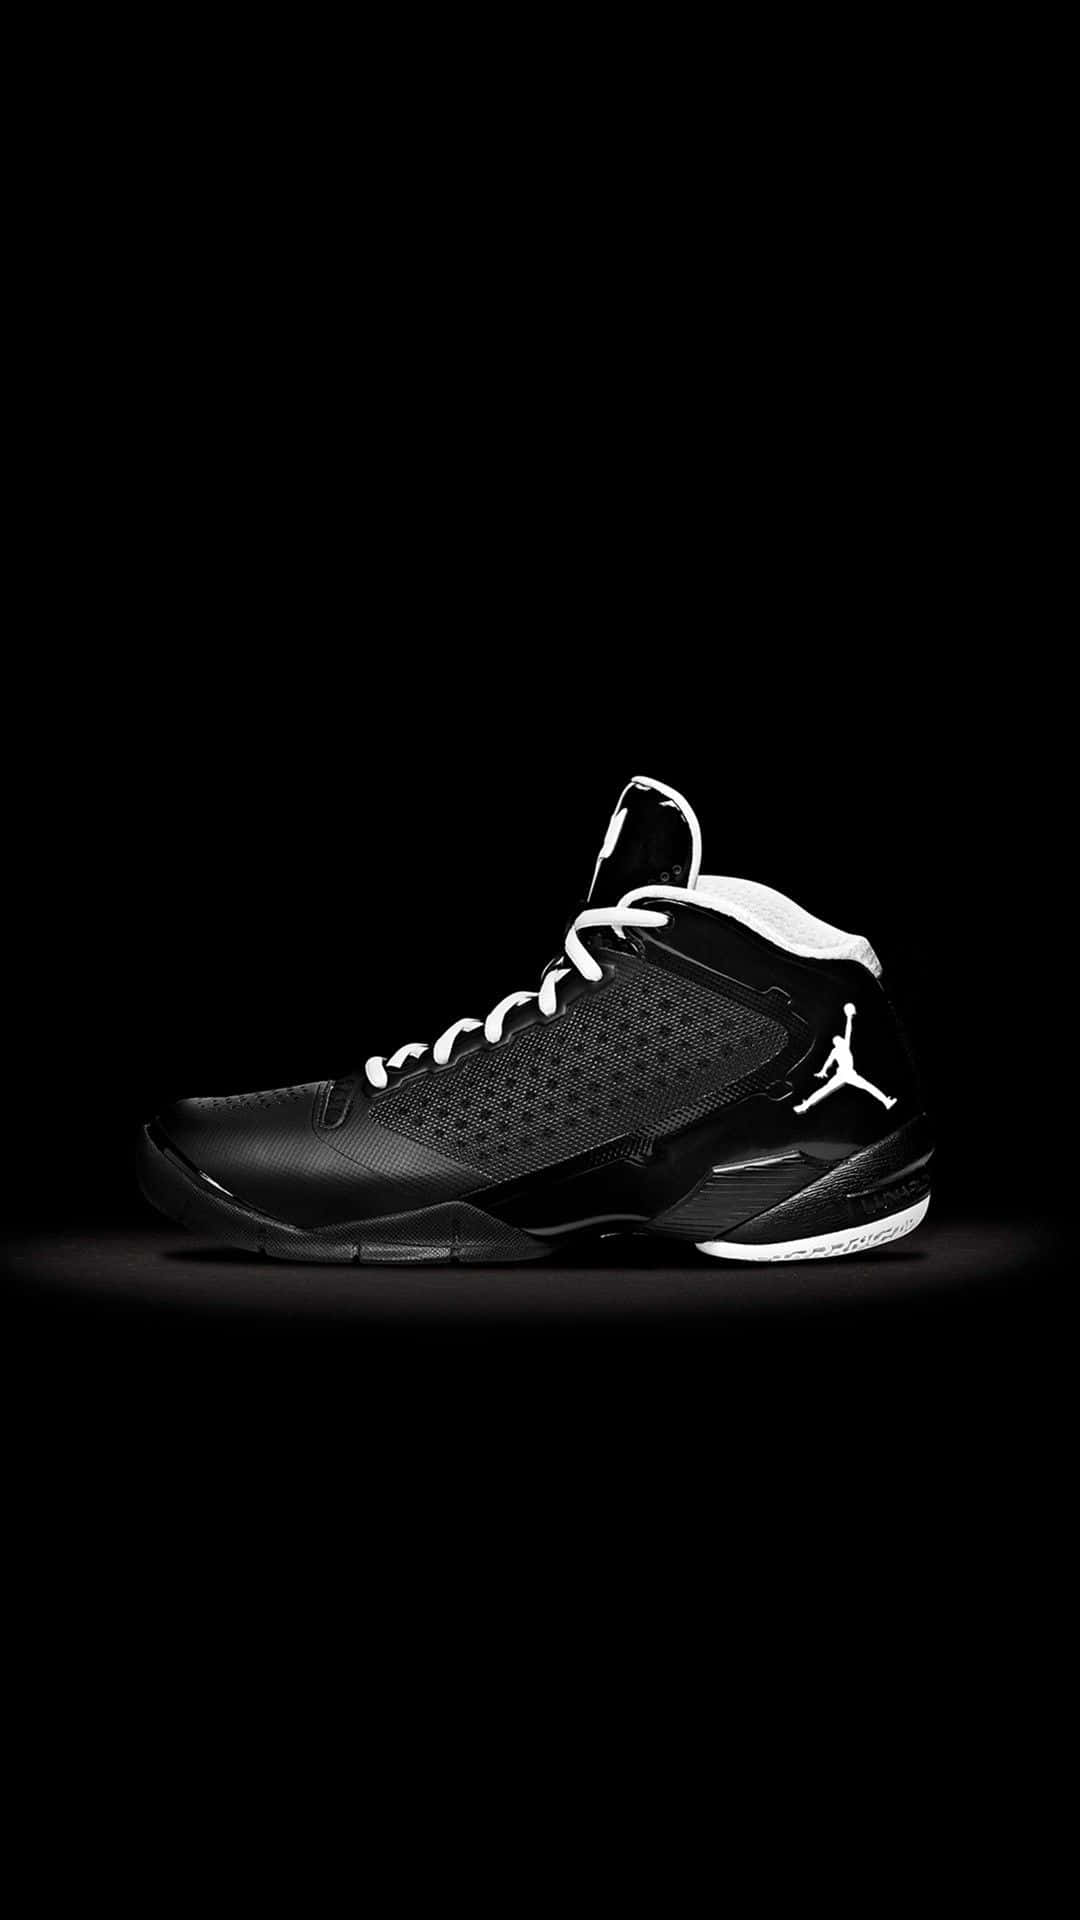 Jordan XIII - sort og hvid basketball sko Wallpaper